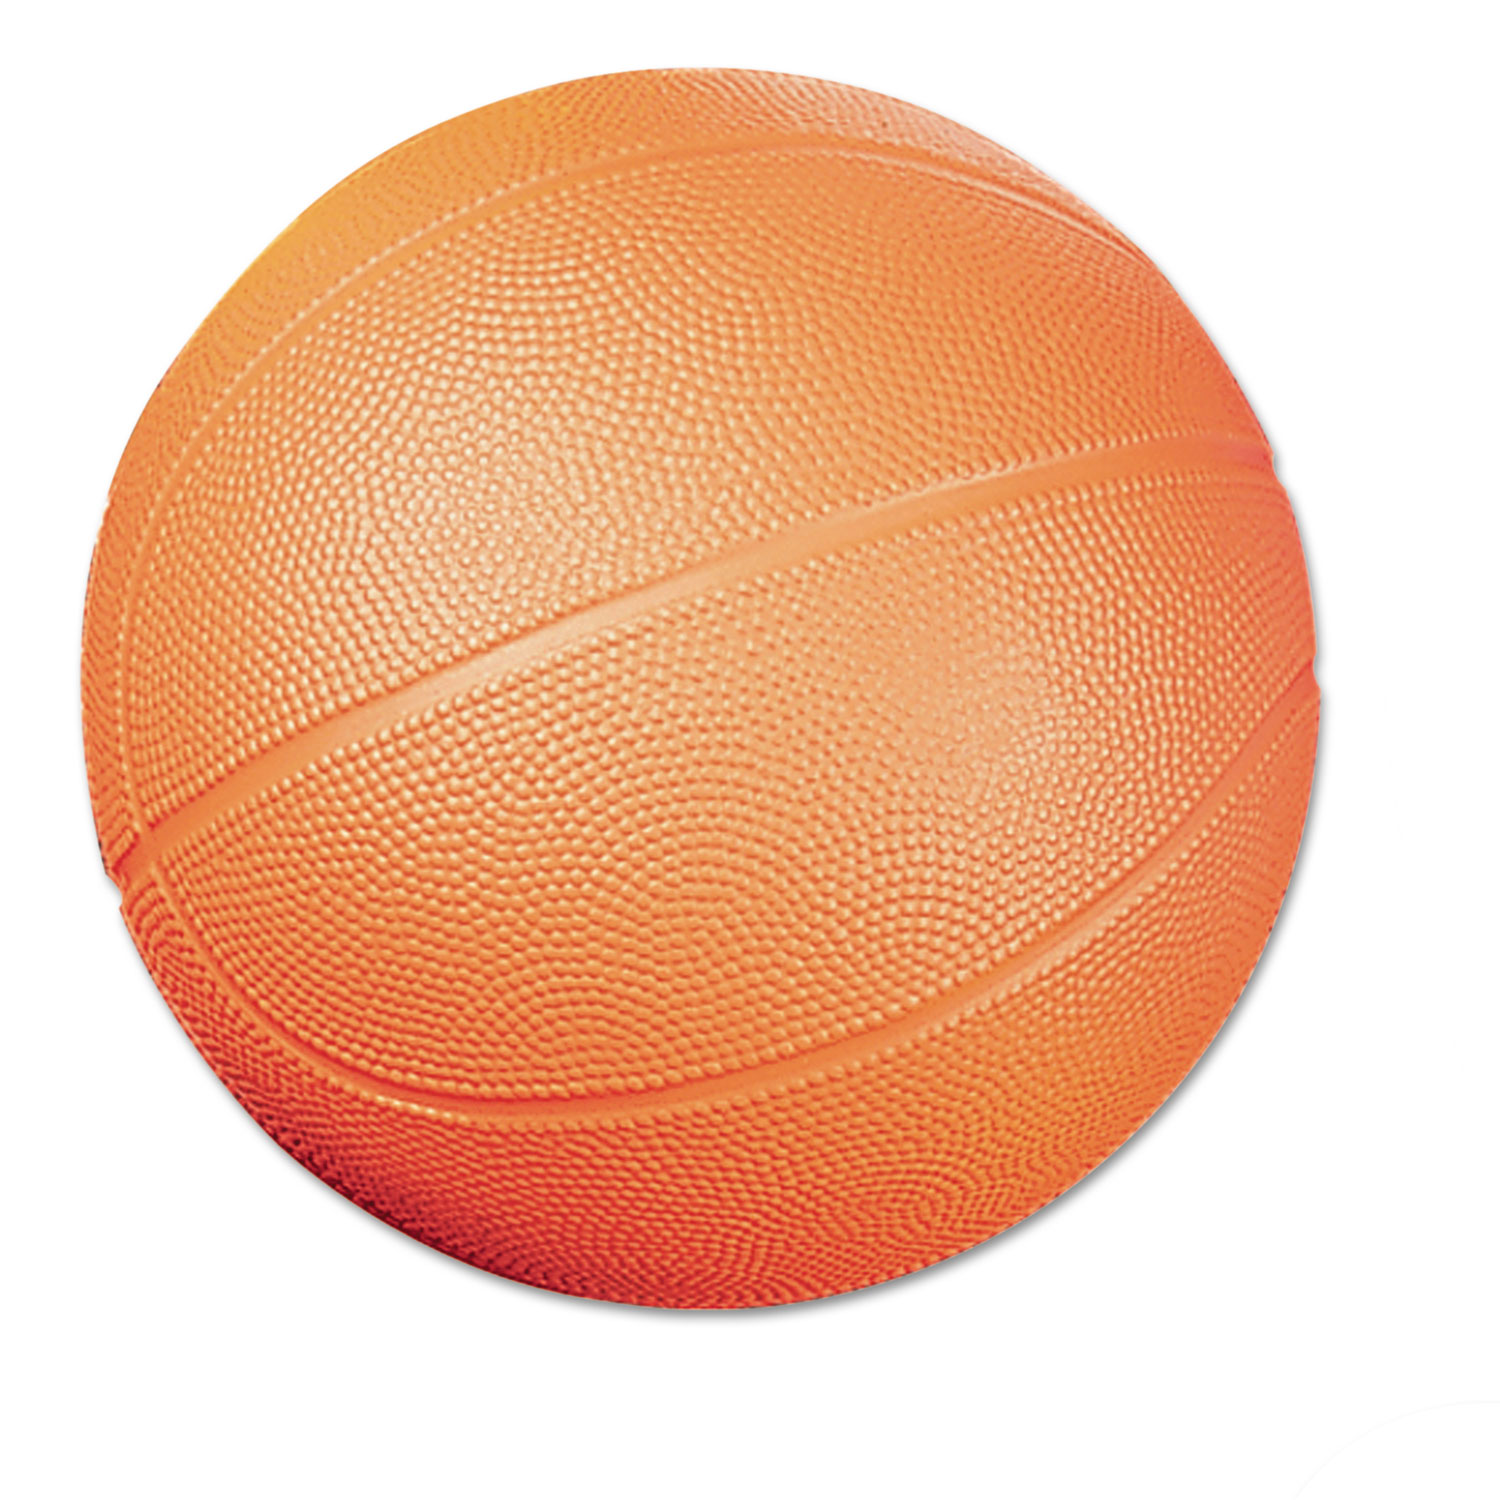 Coated Foam Sport Ball, Basketball, No. 3 Size, Orange